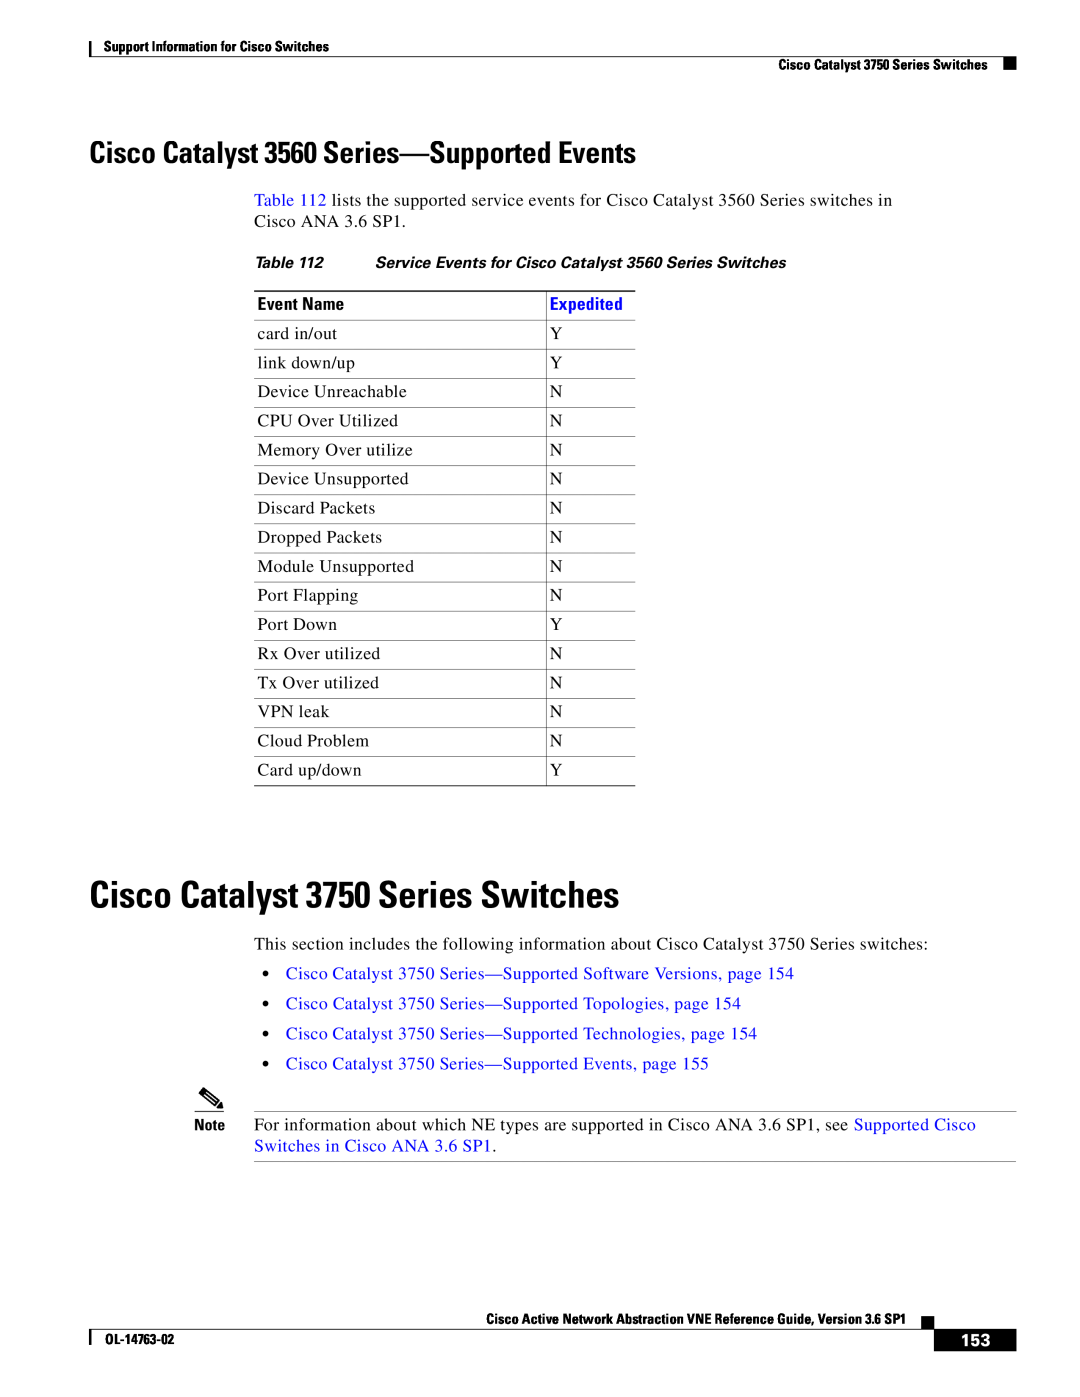 Cisco Systems OL-14763-02 Cisco Catalyst 3750 Series Switches, Cisco Catalyst 3560 Series-Supported Events, Event Name 